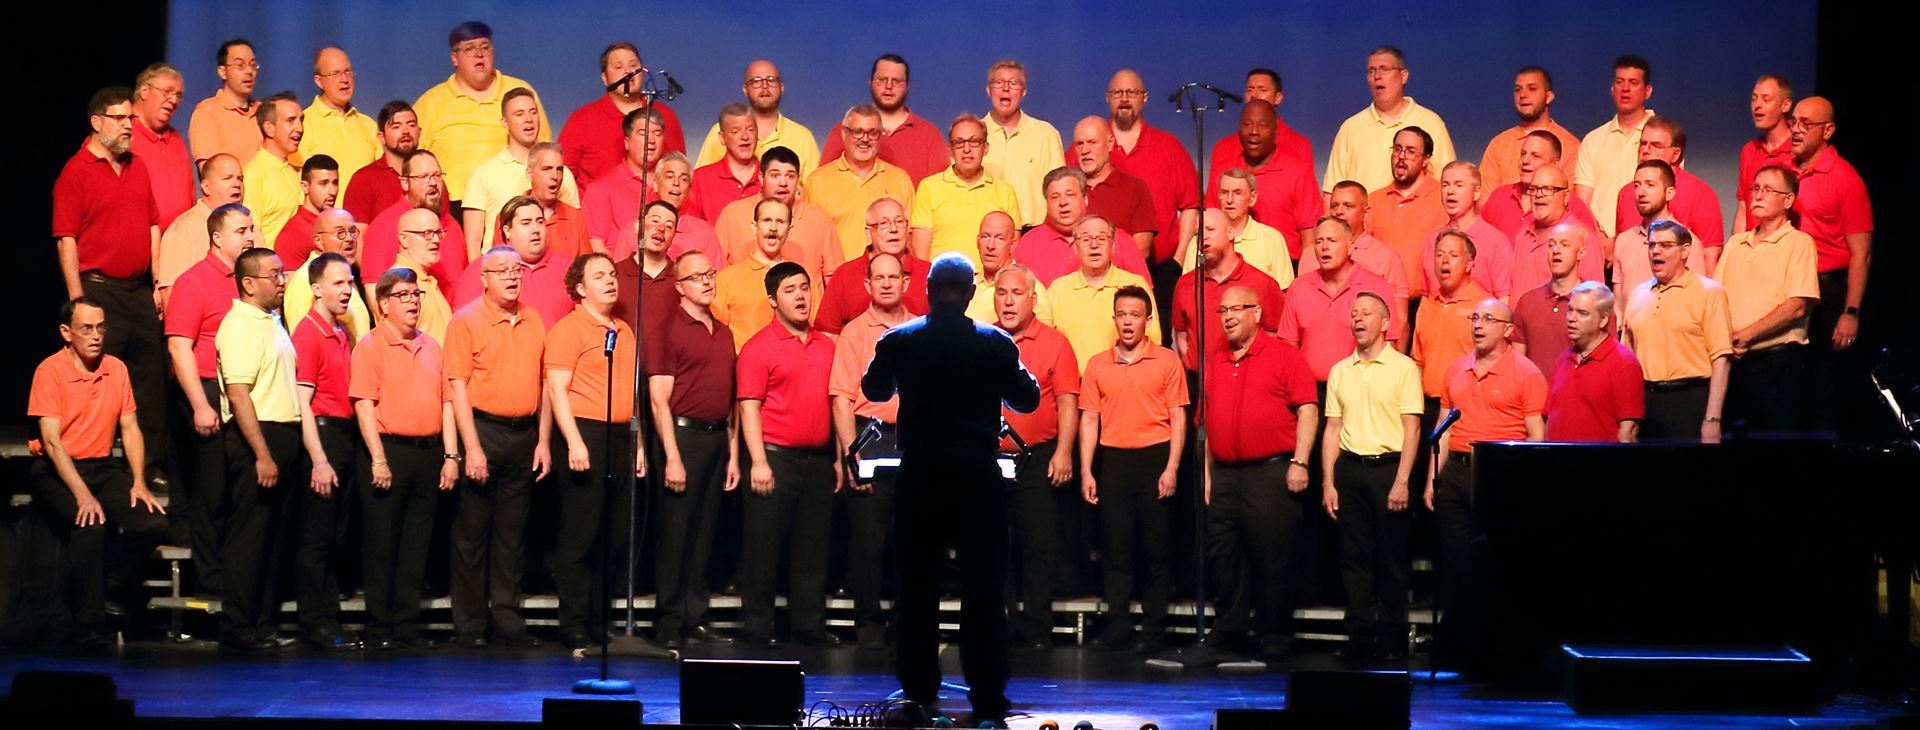 North Coast Men's Chorus 2019 Summer Concert Photo